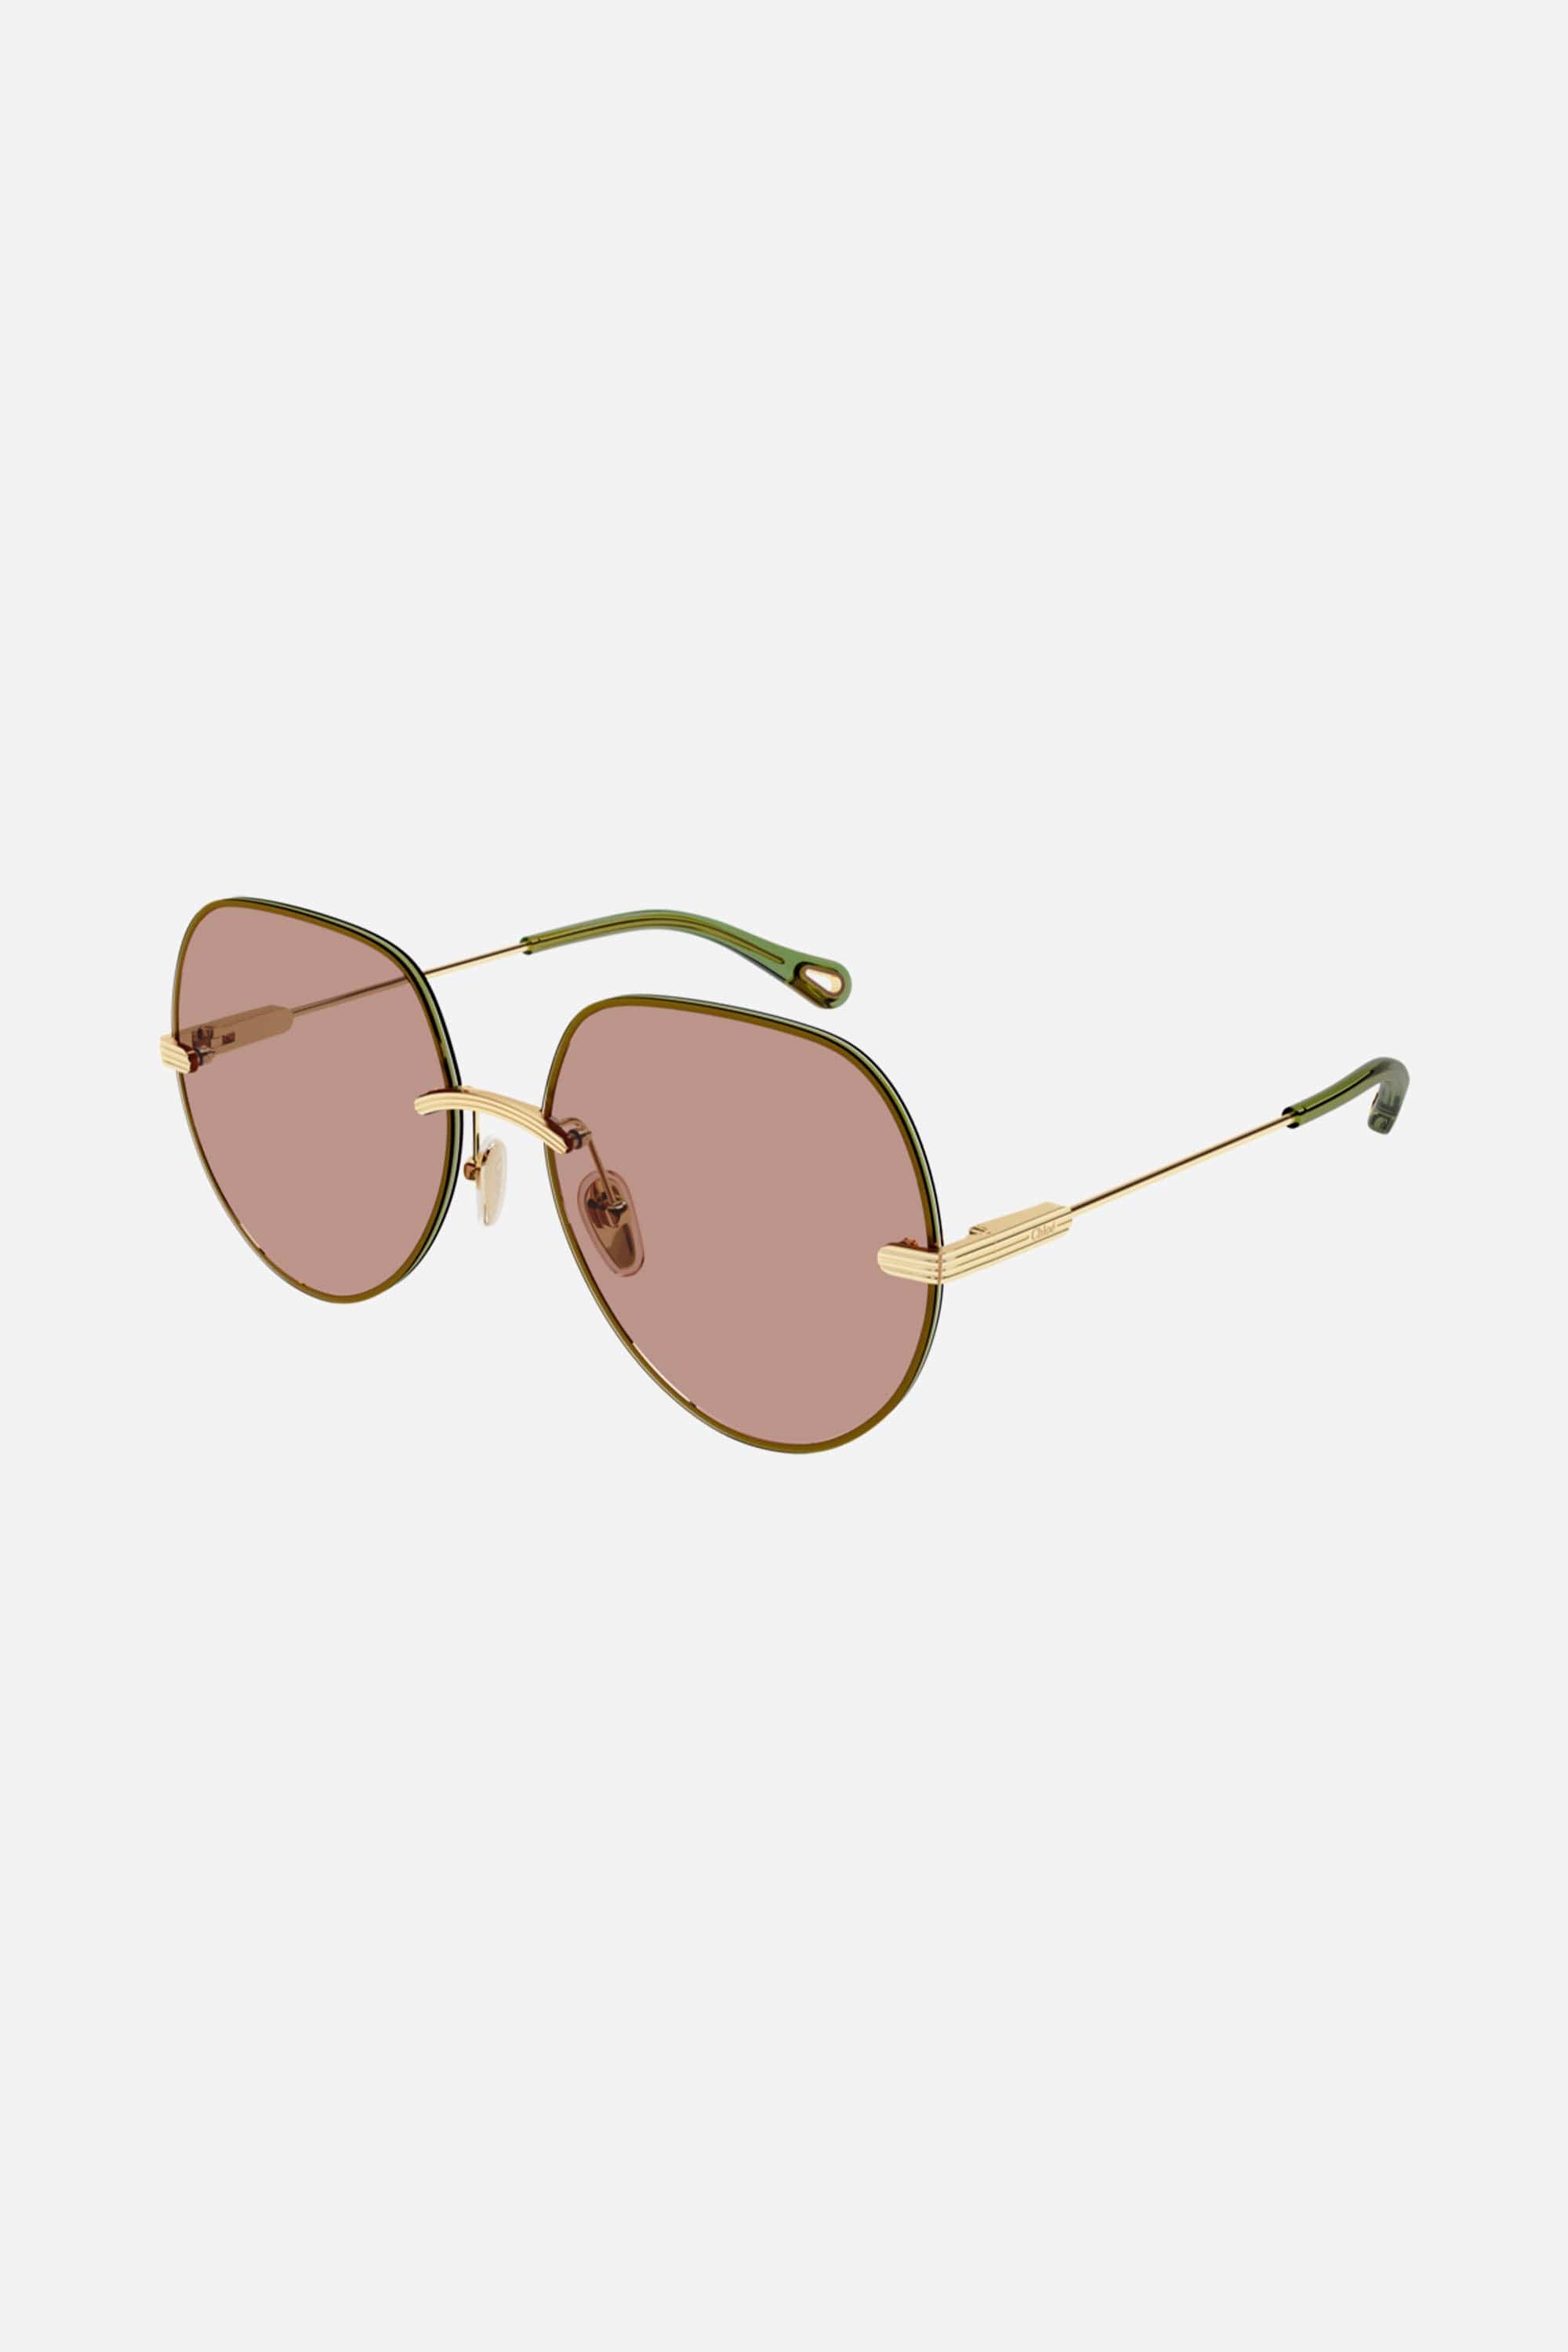 Chloe metal round light brown sunglasses - Eyewear Club